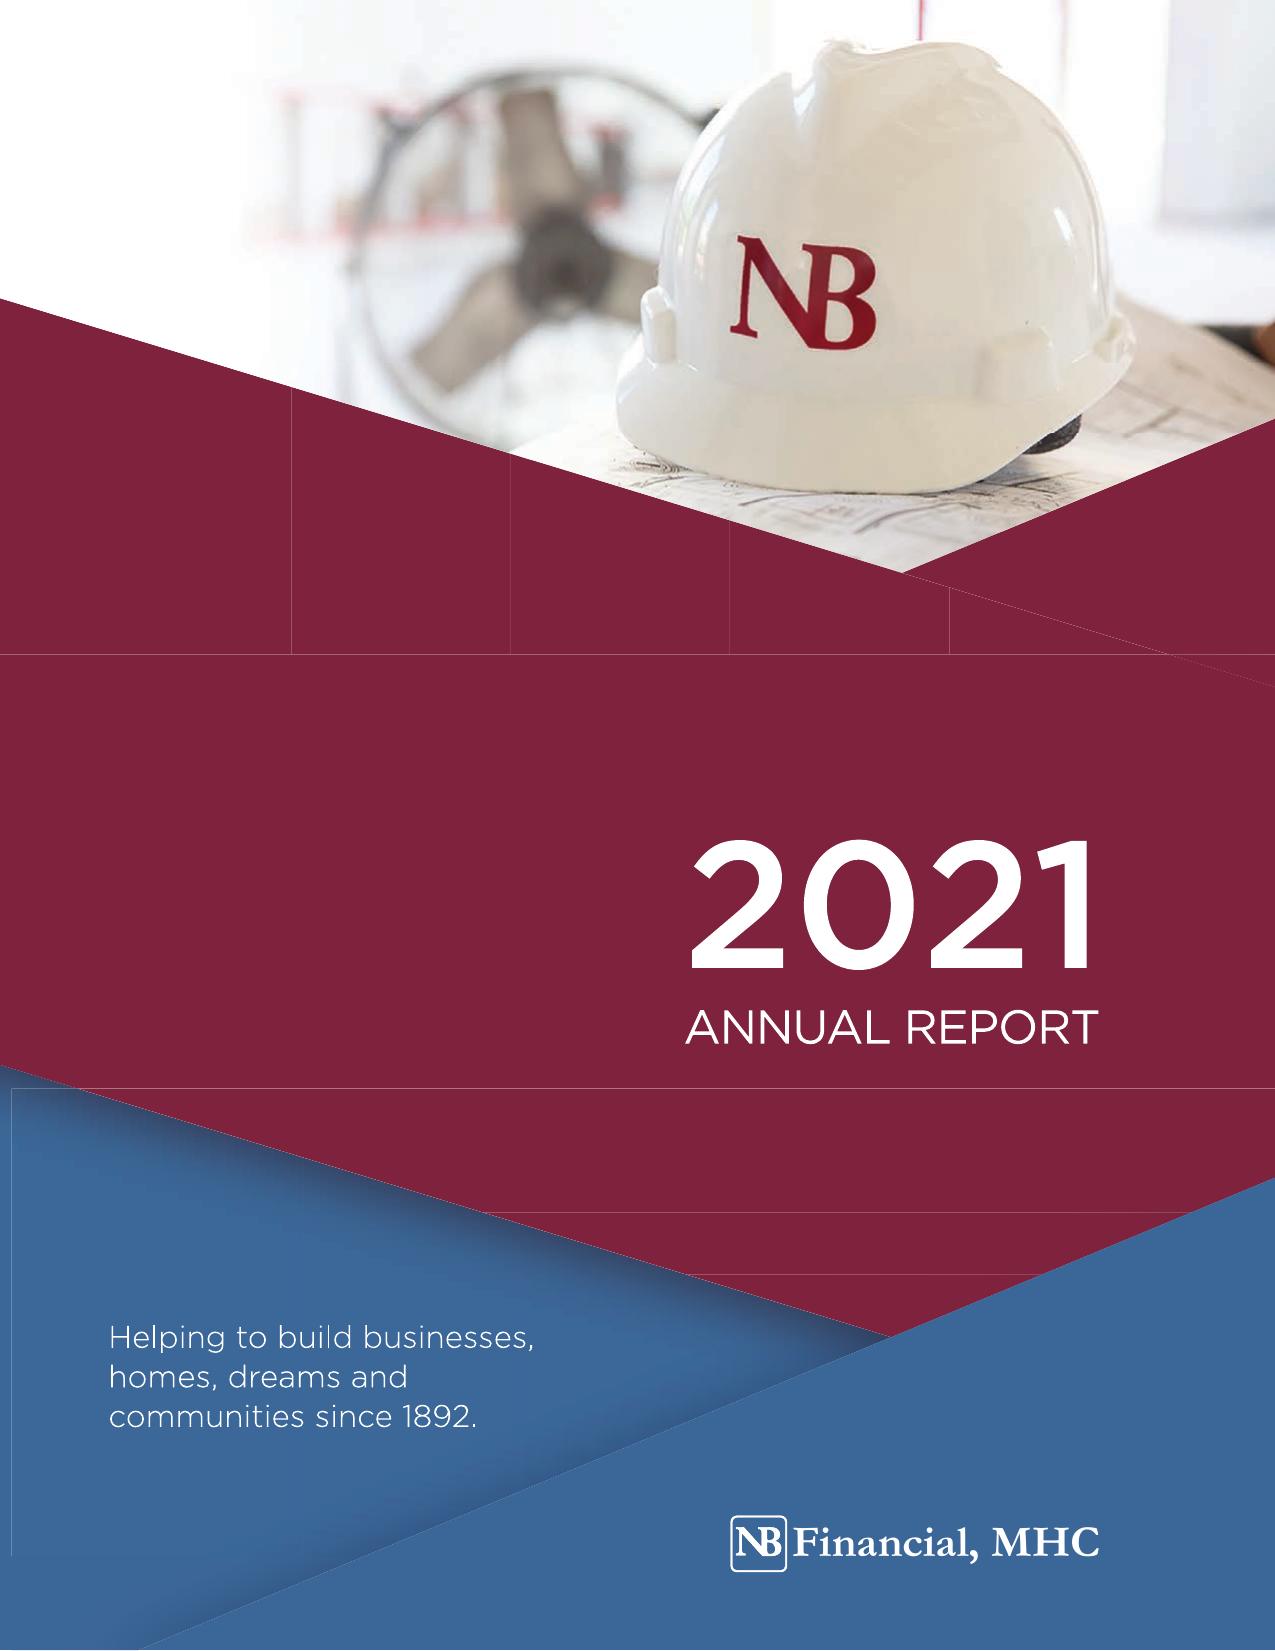 ALTOONABANK Annual Report